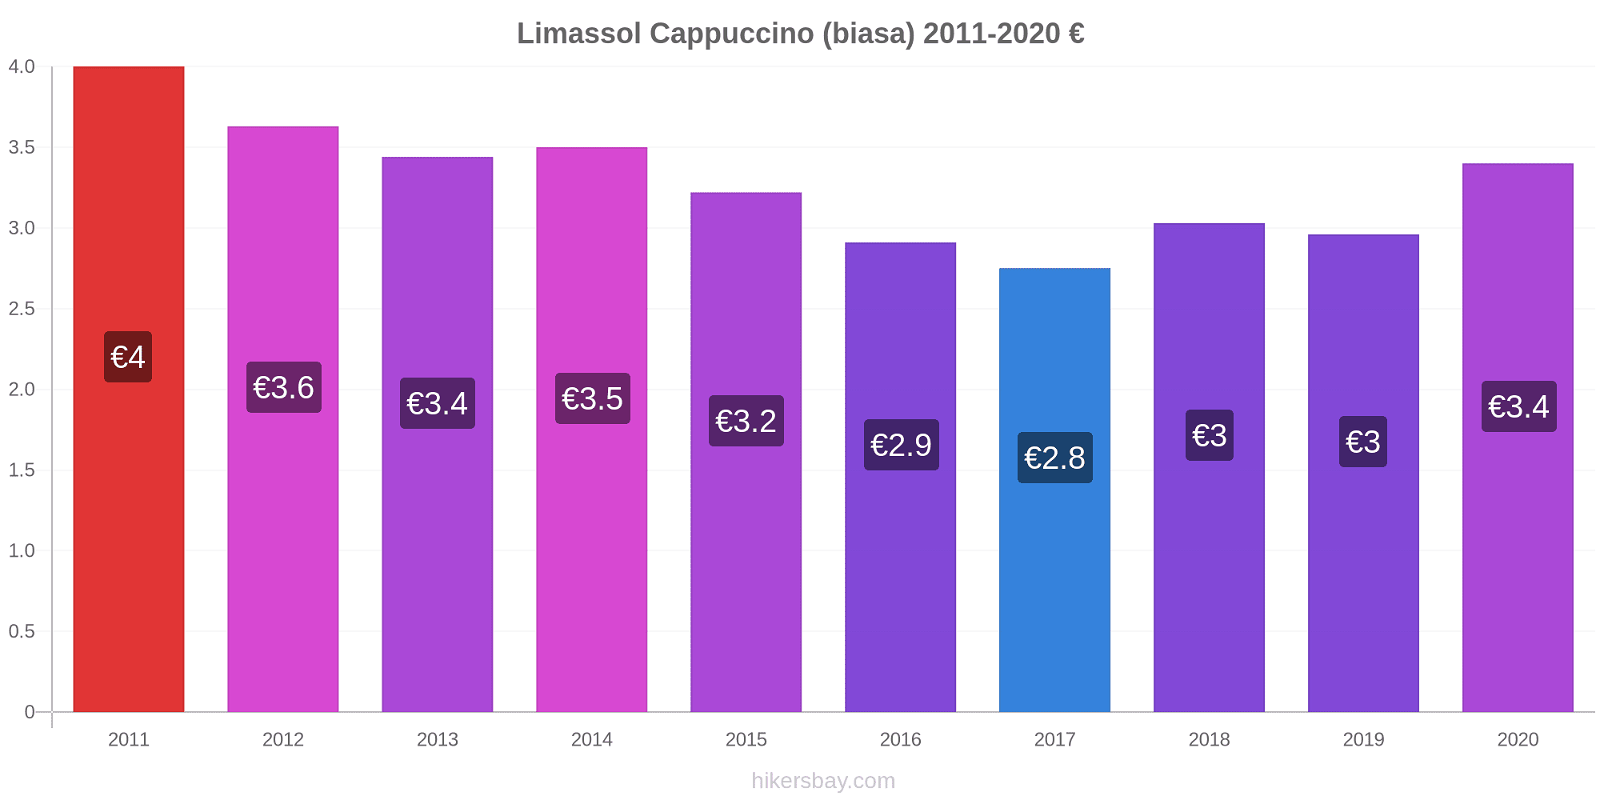 Limassol perubahan harga Cappuccino (biasa) hikersbay.com